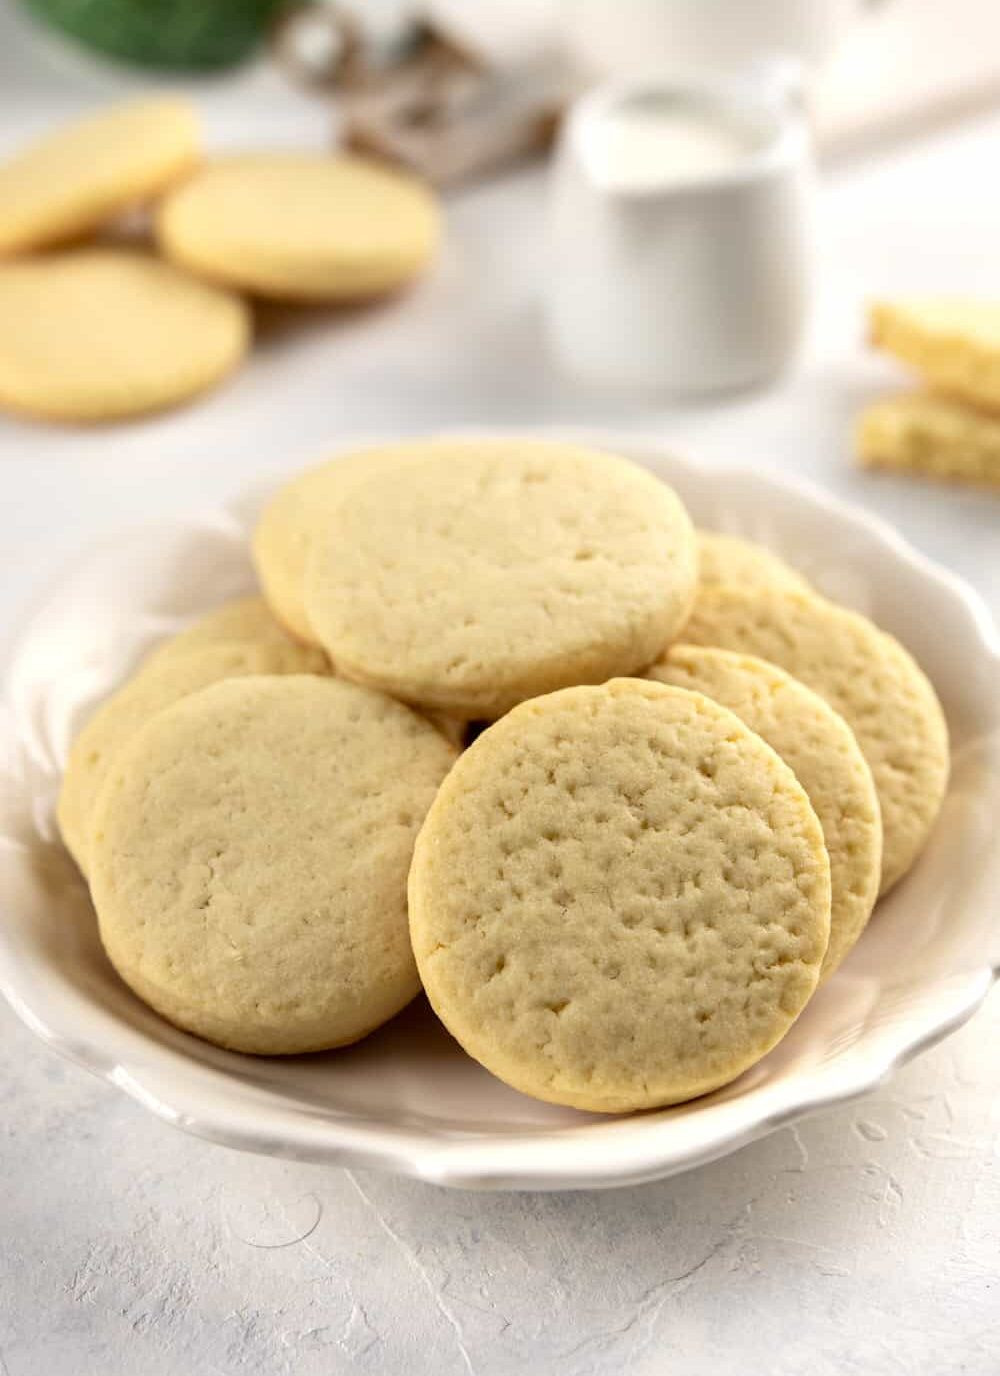 Best Sugar Cookies Recipe No Baking soda